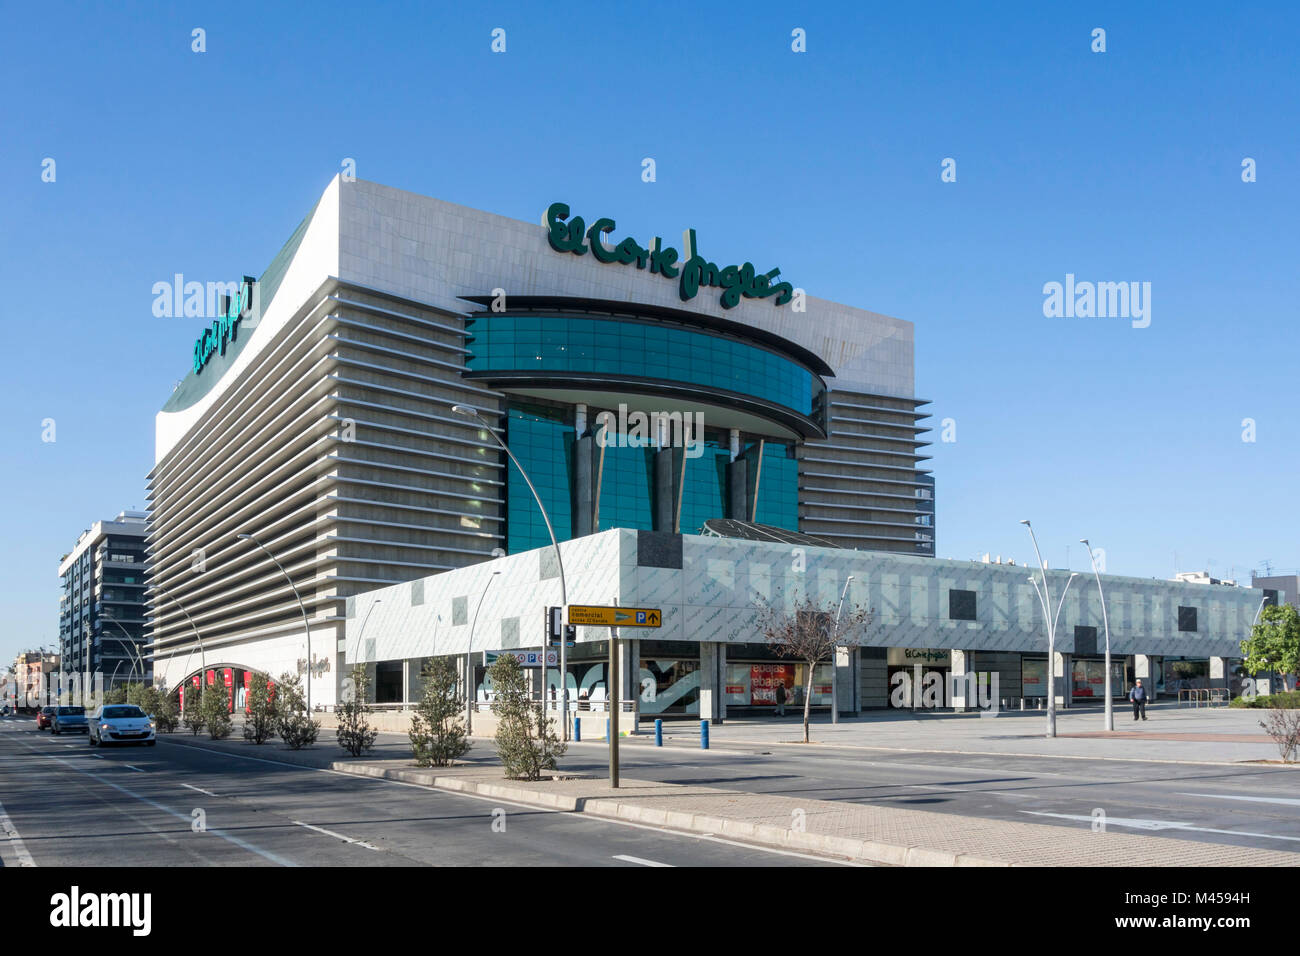 El Corte Ingles, department store. Castellon, Espagne Photo Stock - Alamy